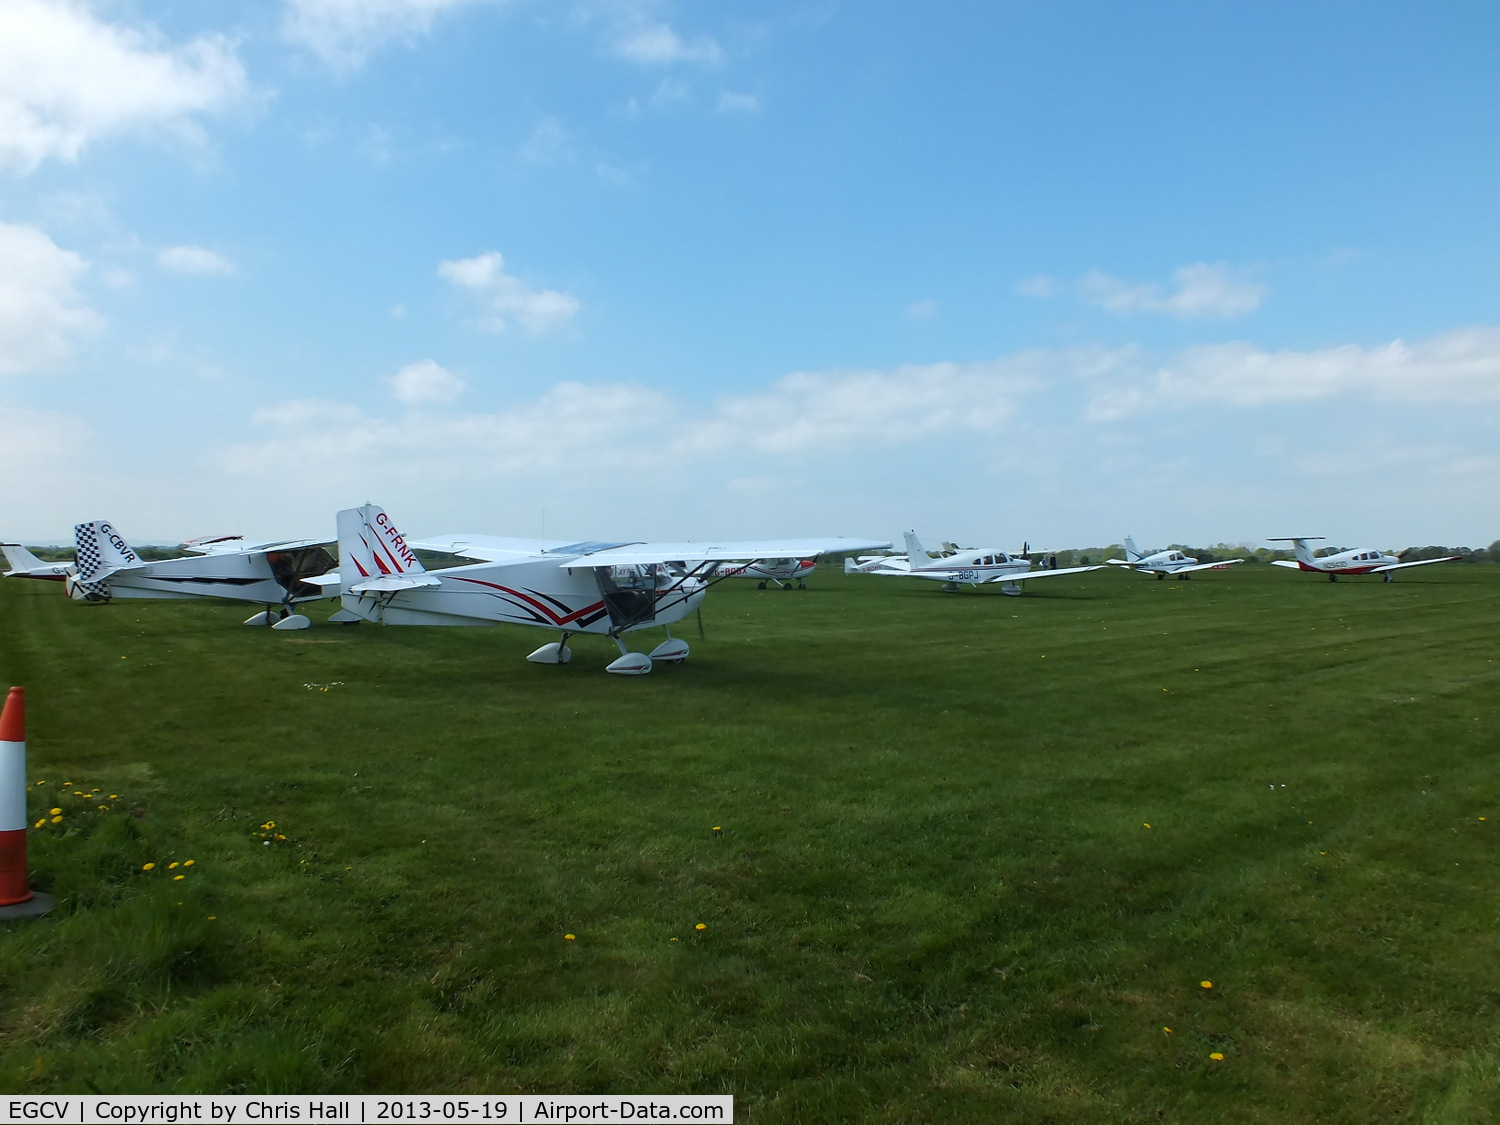 Sleap Airfield Airport, Shrewsbury, England United Kingdom (EGCV) - visitors at the Vintage Aircraft flyin, Sleap